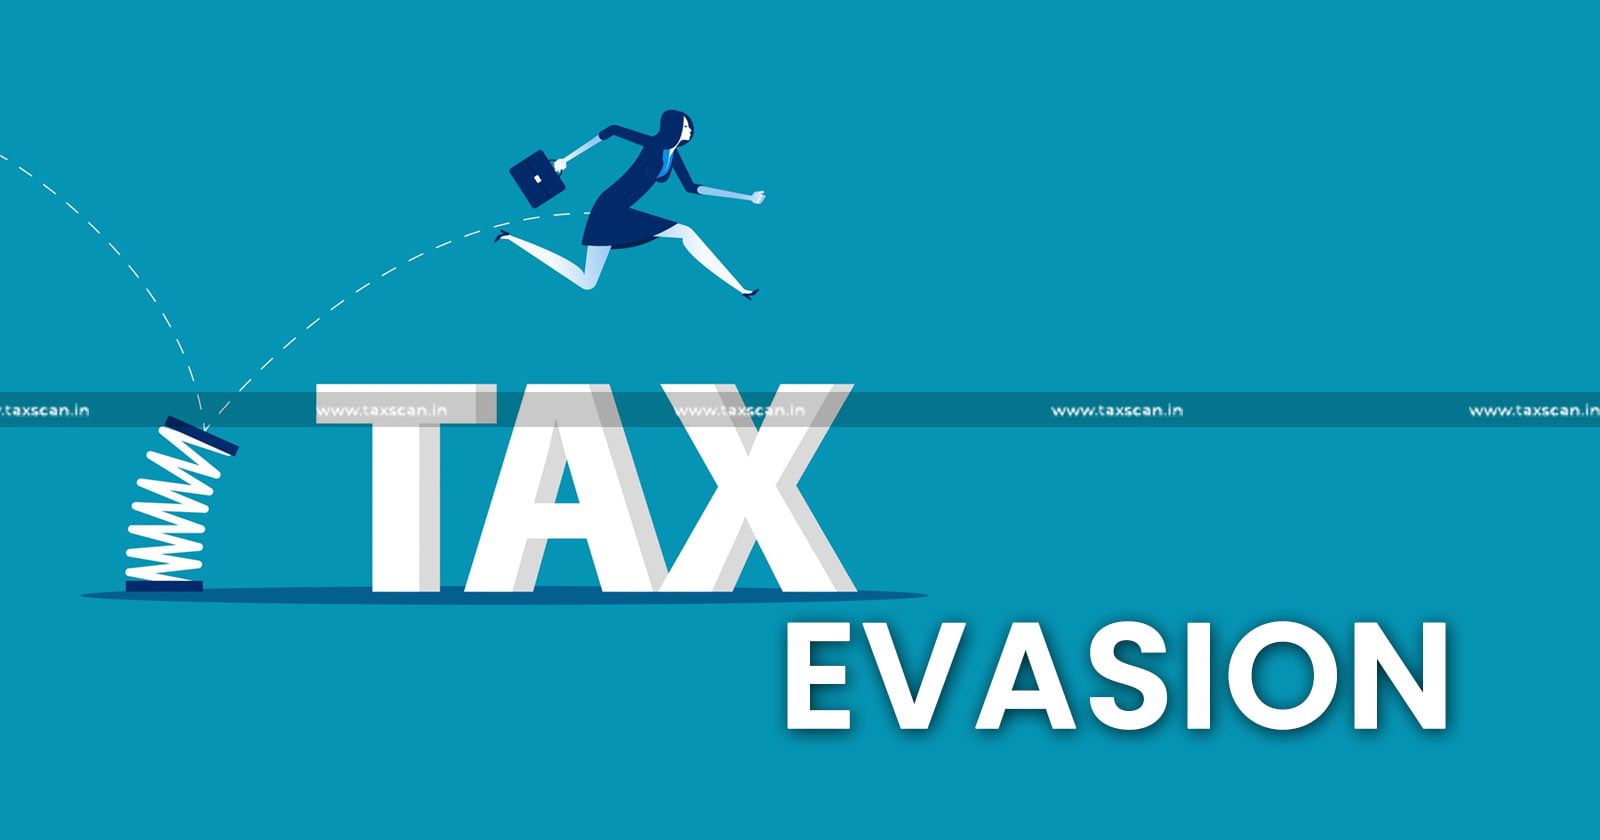 Tax Evasion under Government License - proper registers - documents - Karnataka HC - FIR registered under Karnataka Police Act